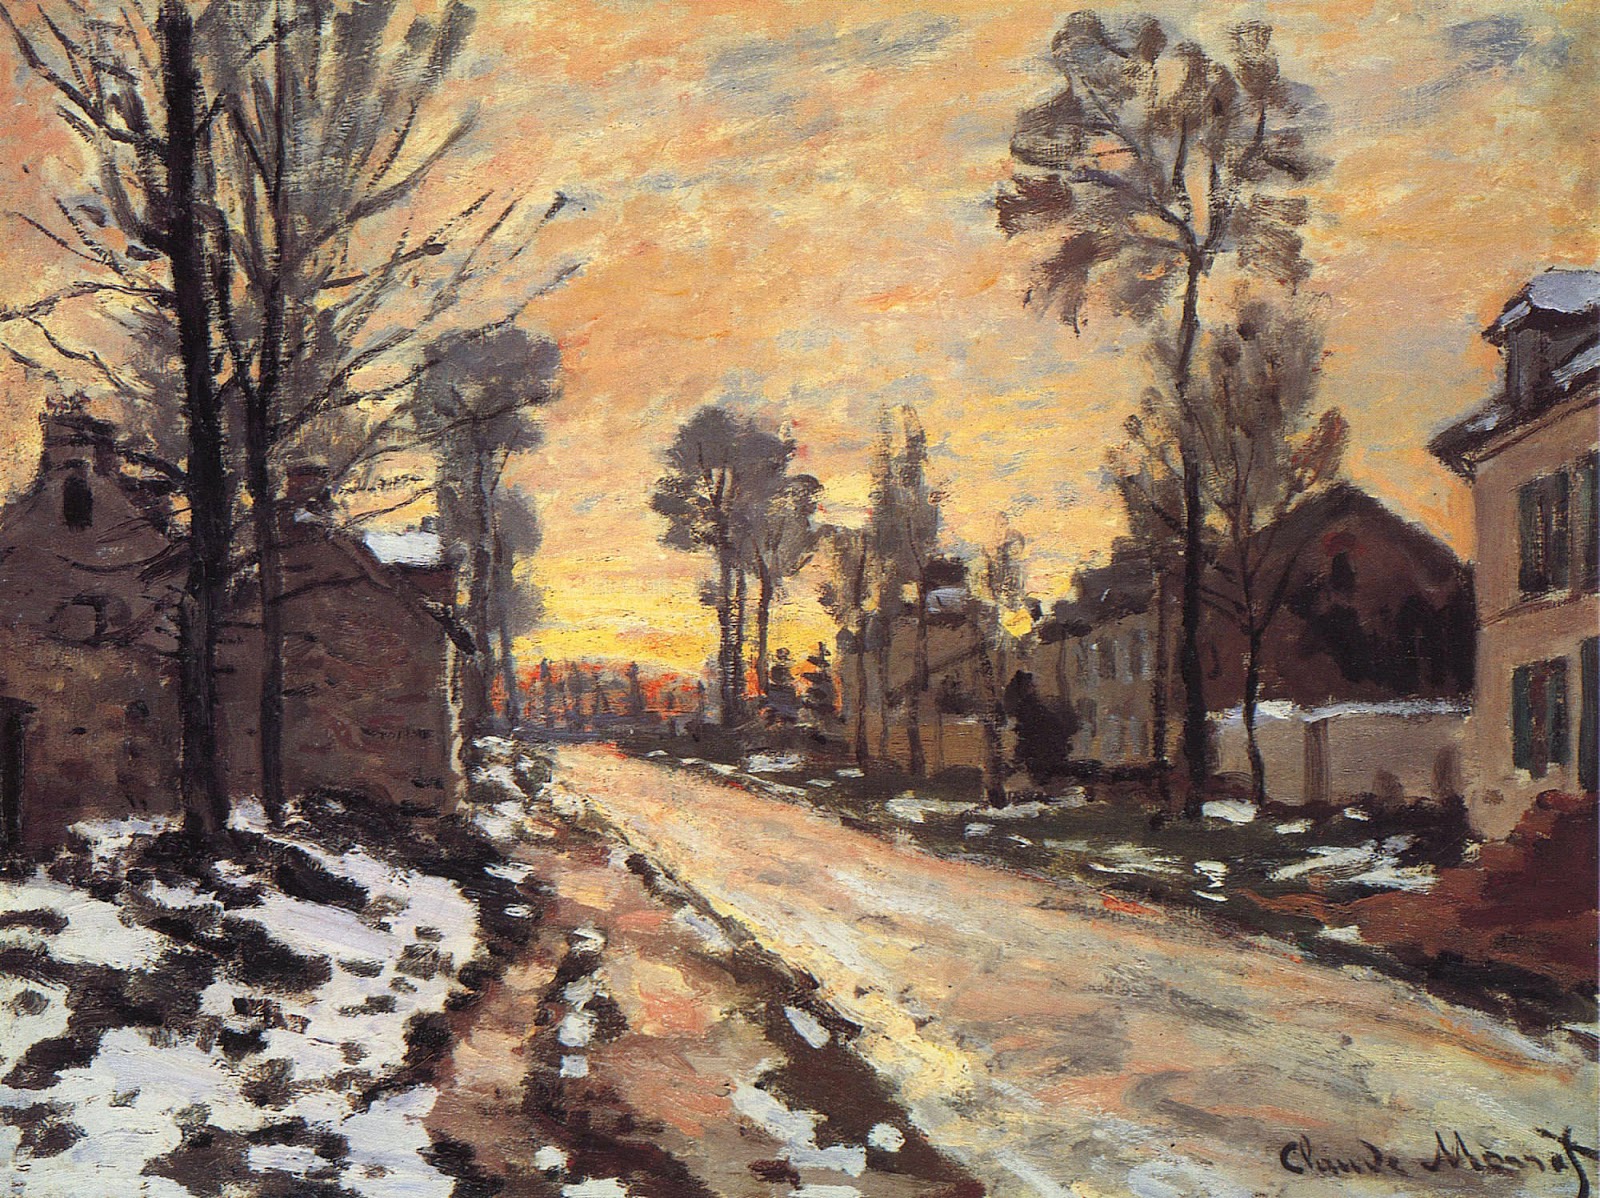 Claude+Monet-1840-1926 (615).jpg